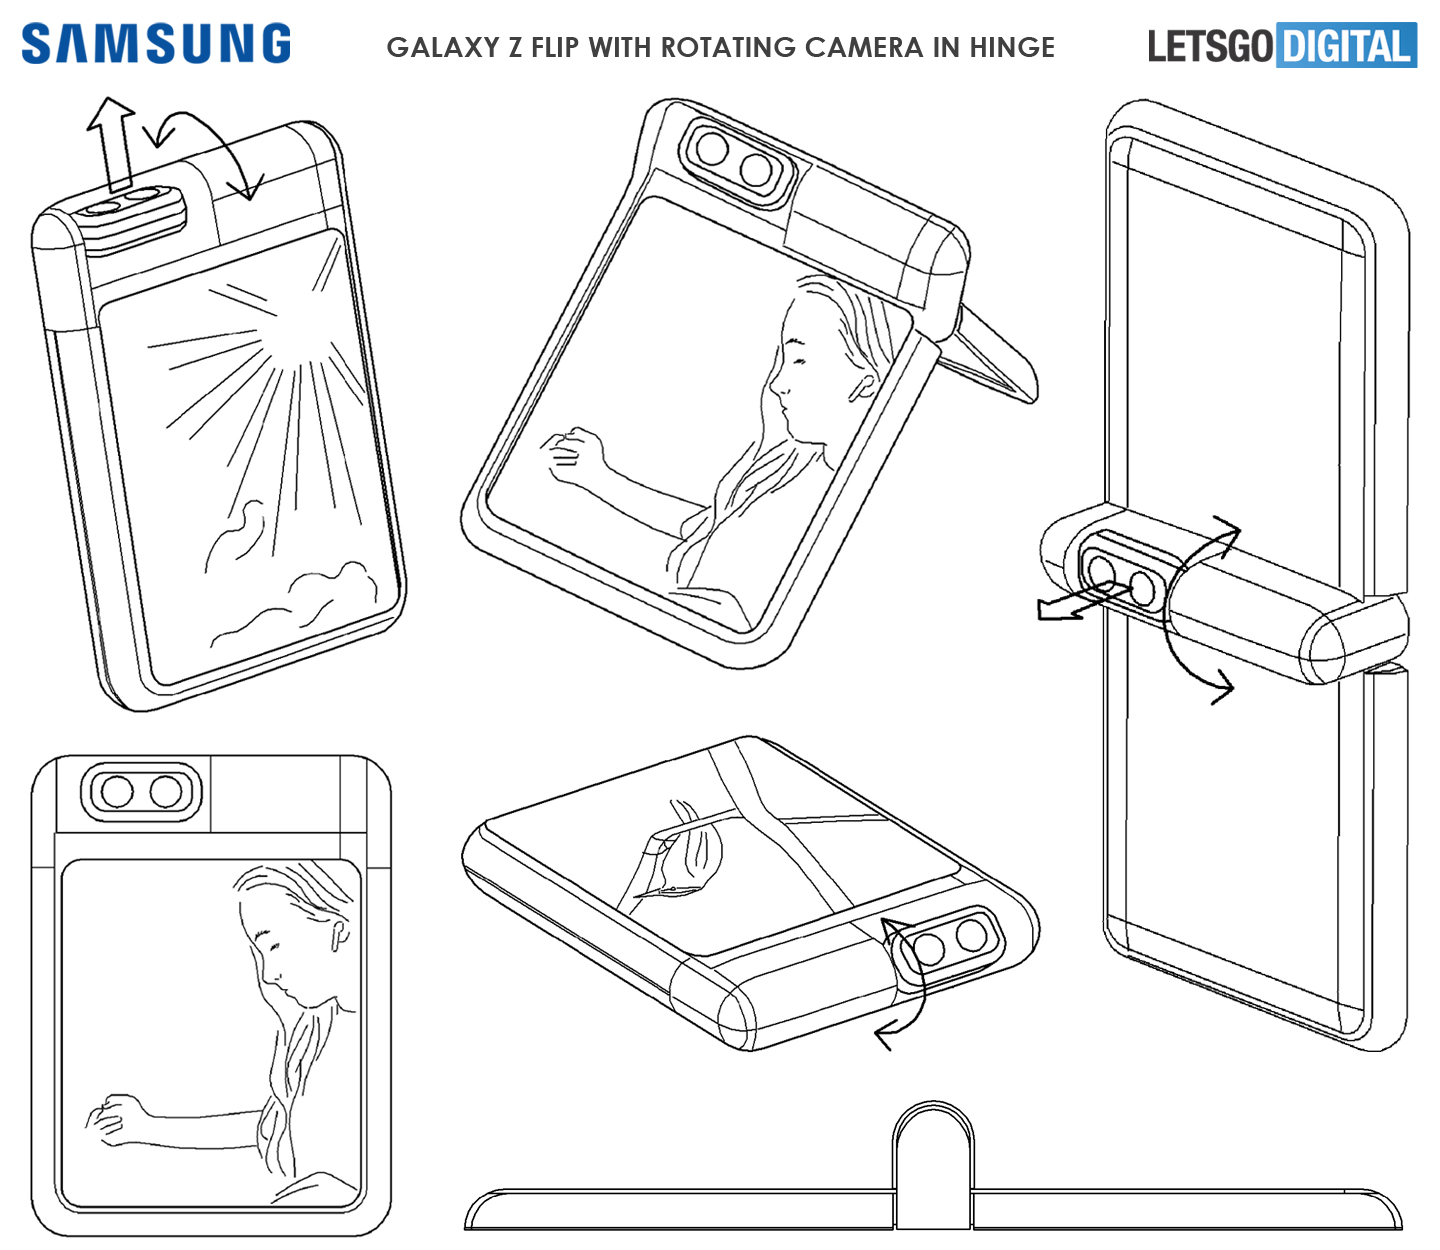 Samsung Galaxy Z Flip Hinge Patent